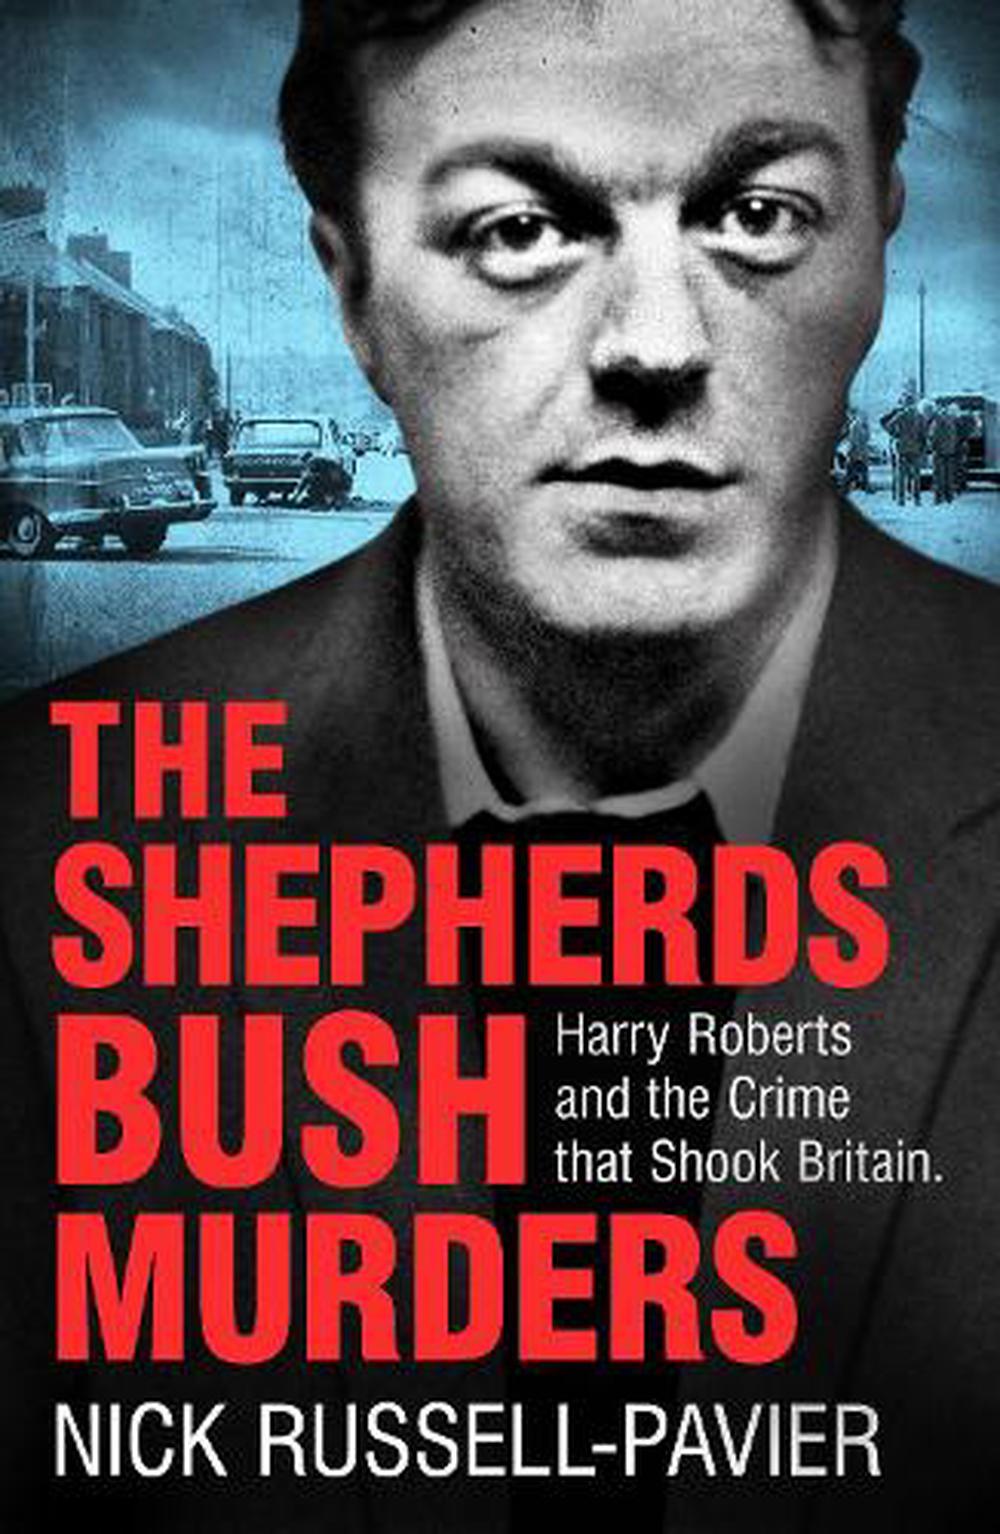 The Shepherd's Bush Murders by Nick Russell-Pavier, Paperback ...